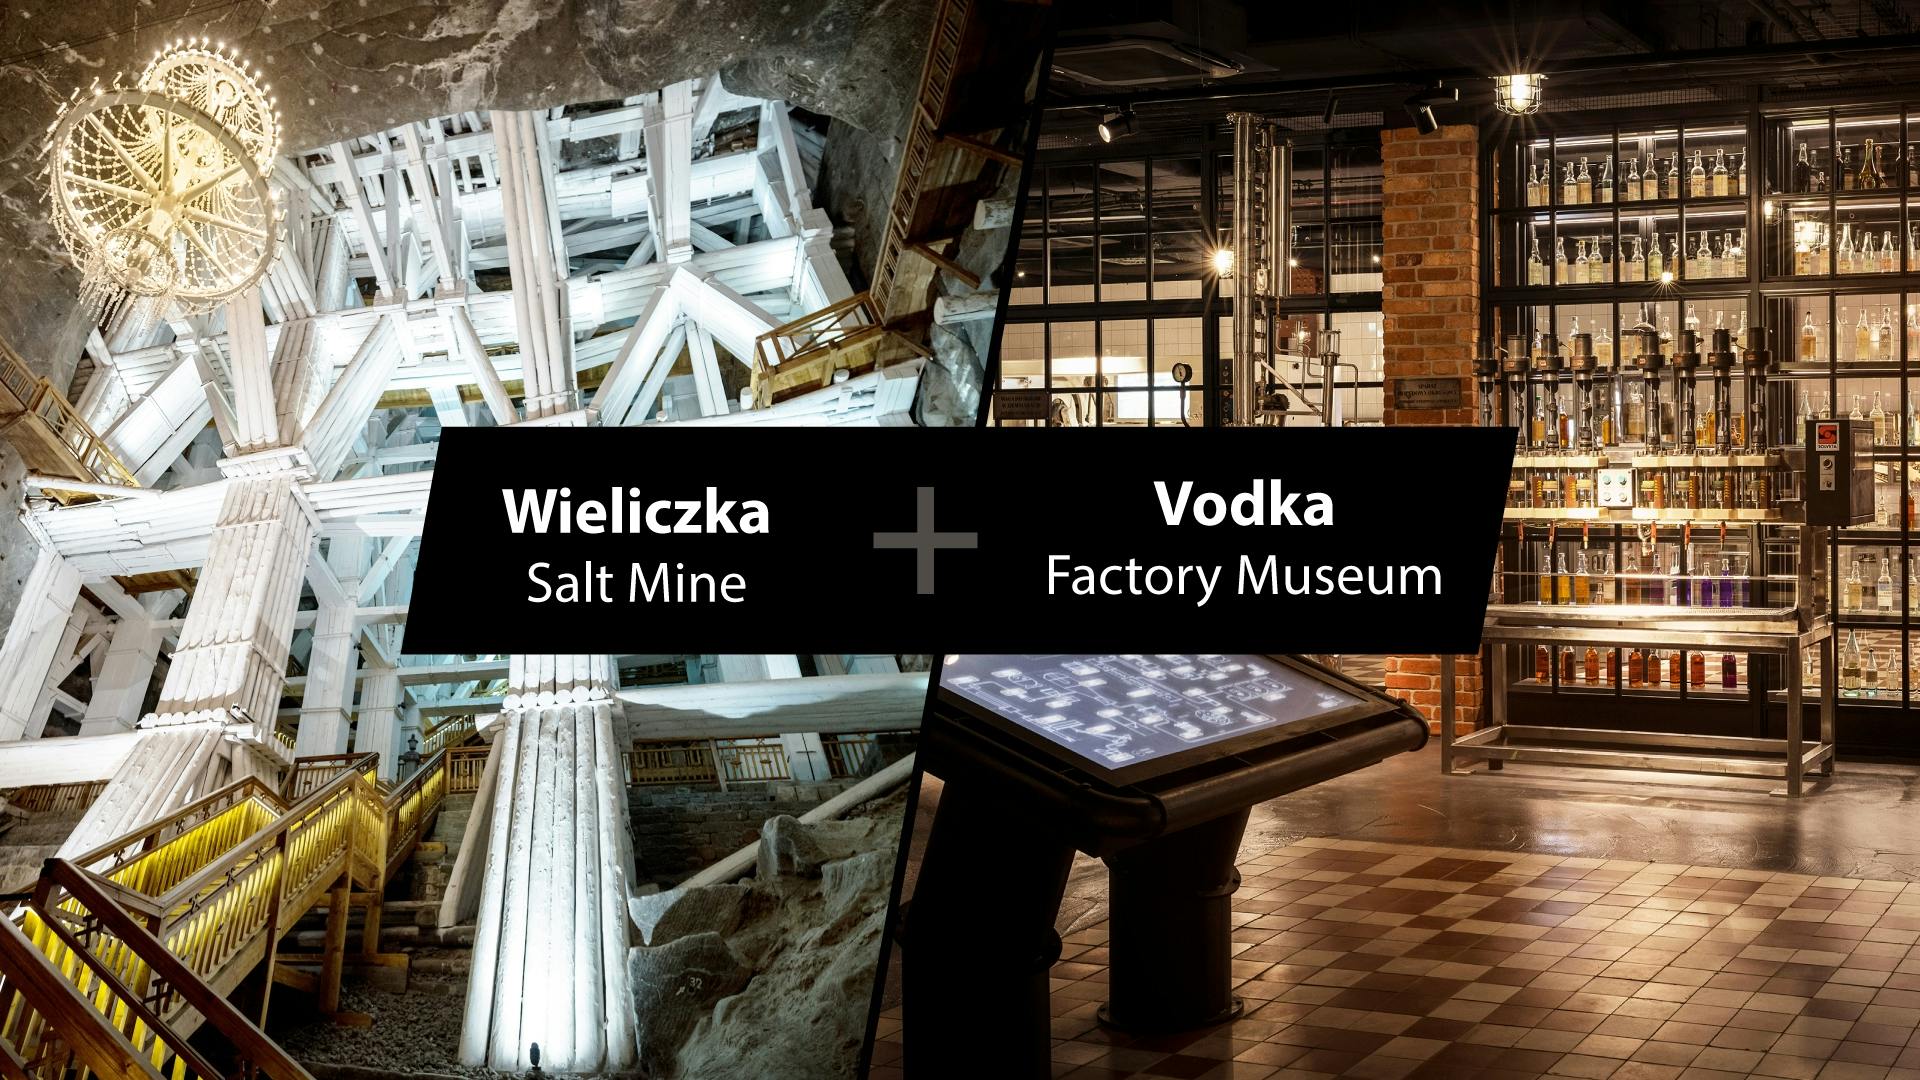 Wieliczka Salt Mine and Krakow Vodka Factory Museum tour with tasting